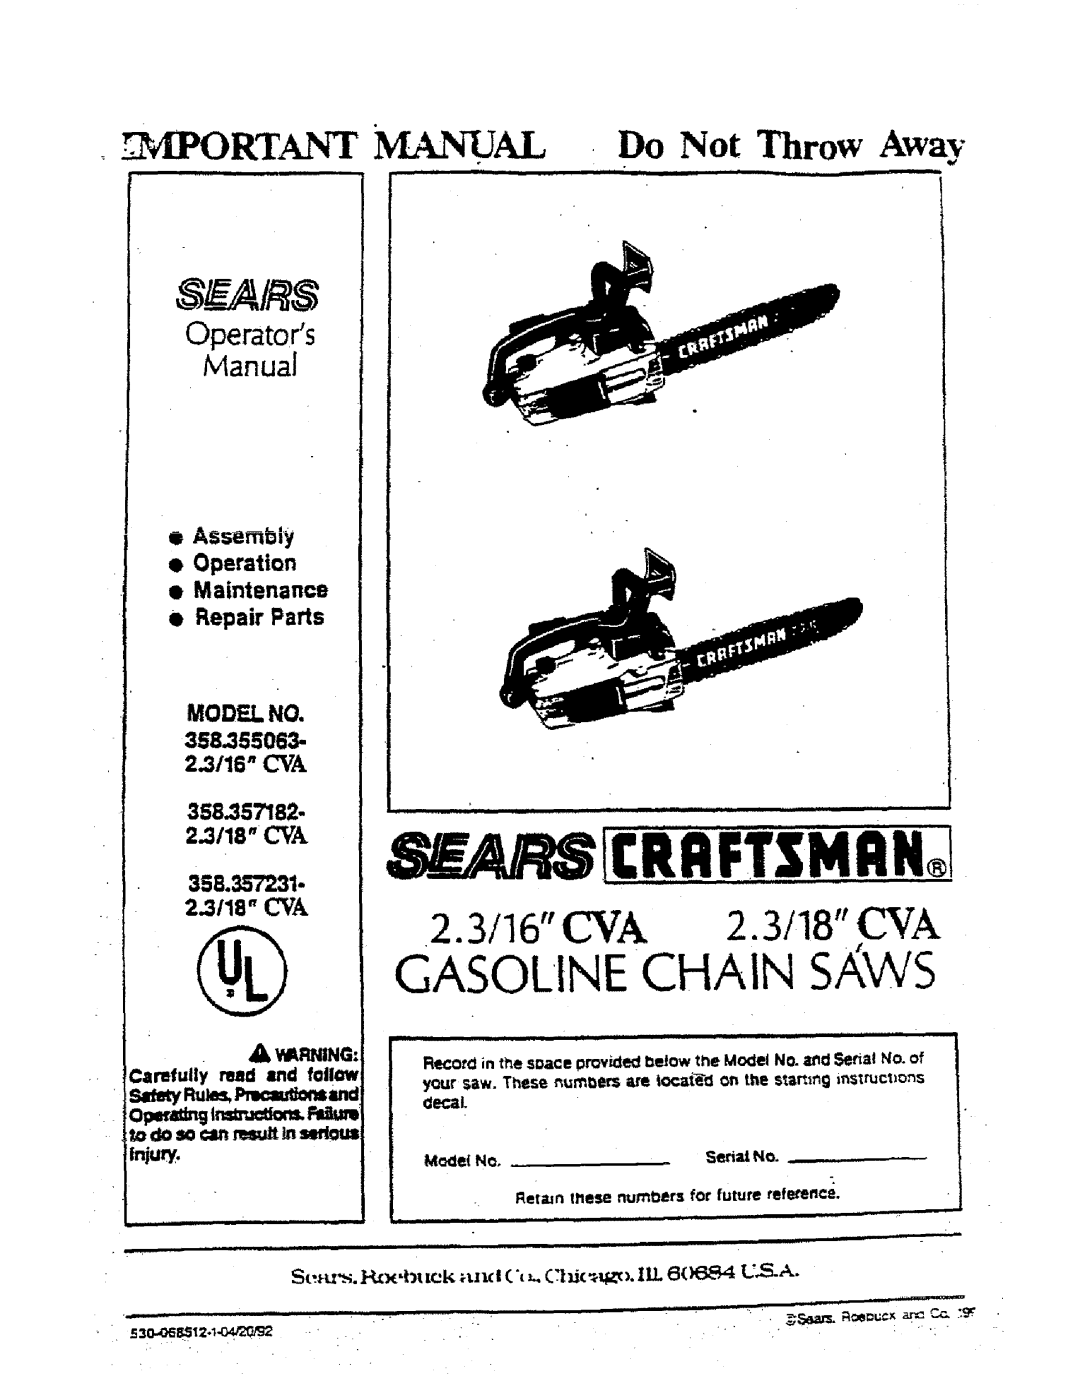 Sears 358.357231 manual 2.3/16 CVA 2.3/18 CVA, Rt. F Jal, Assembly Operation Maintenance Repair Parts, U.S.A, Y Rnjng, In 